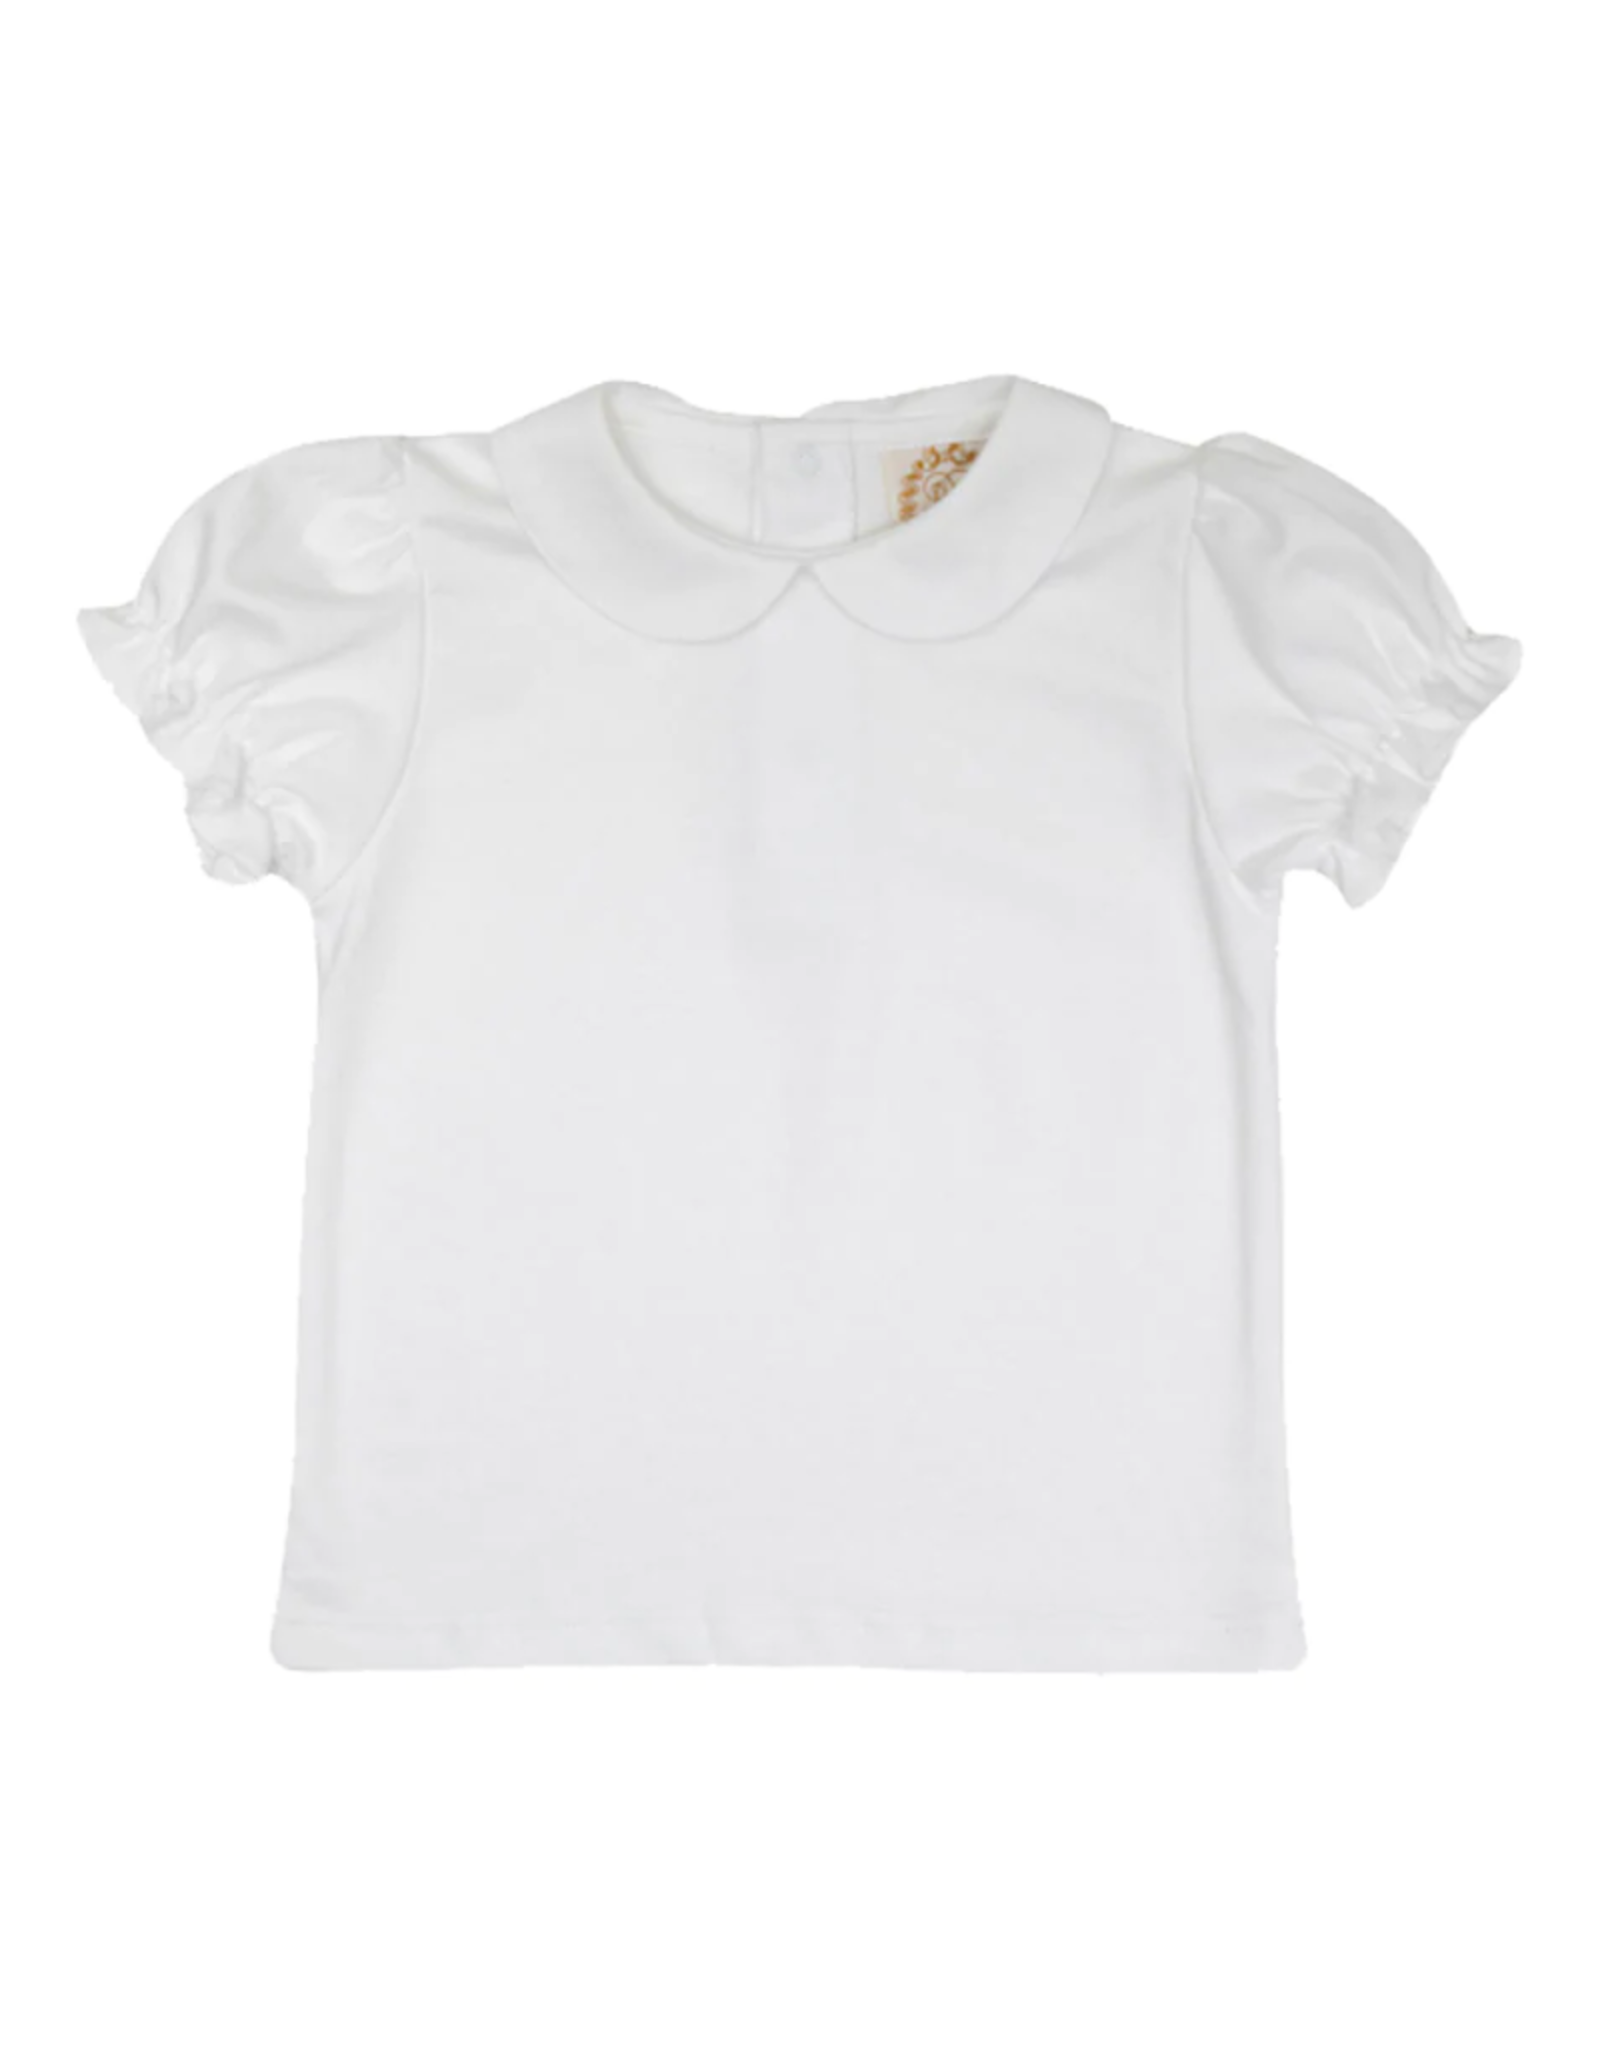 The Beaufort Bonnet Company Maudes Peter Pan Collar Shirt SS, Worth Ave White